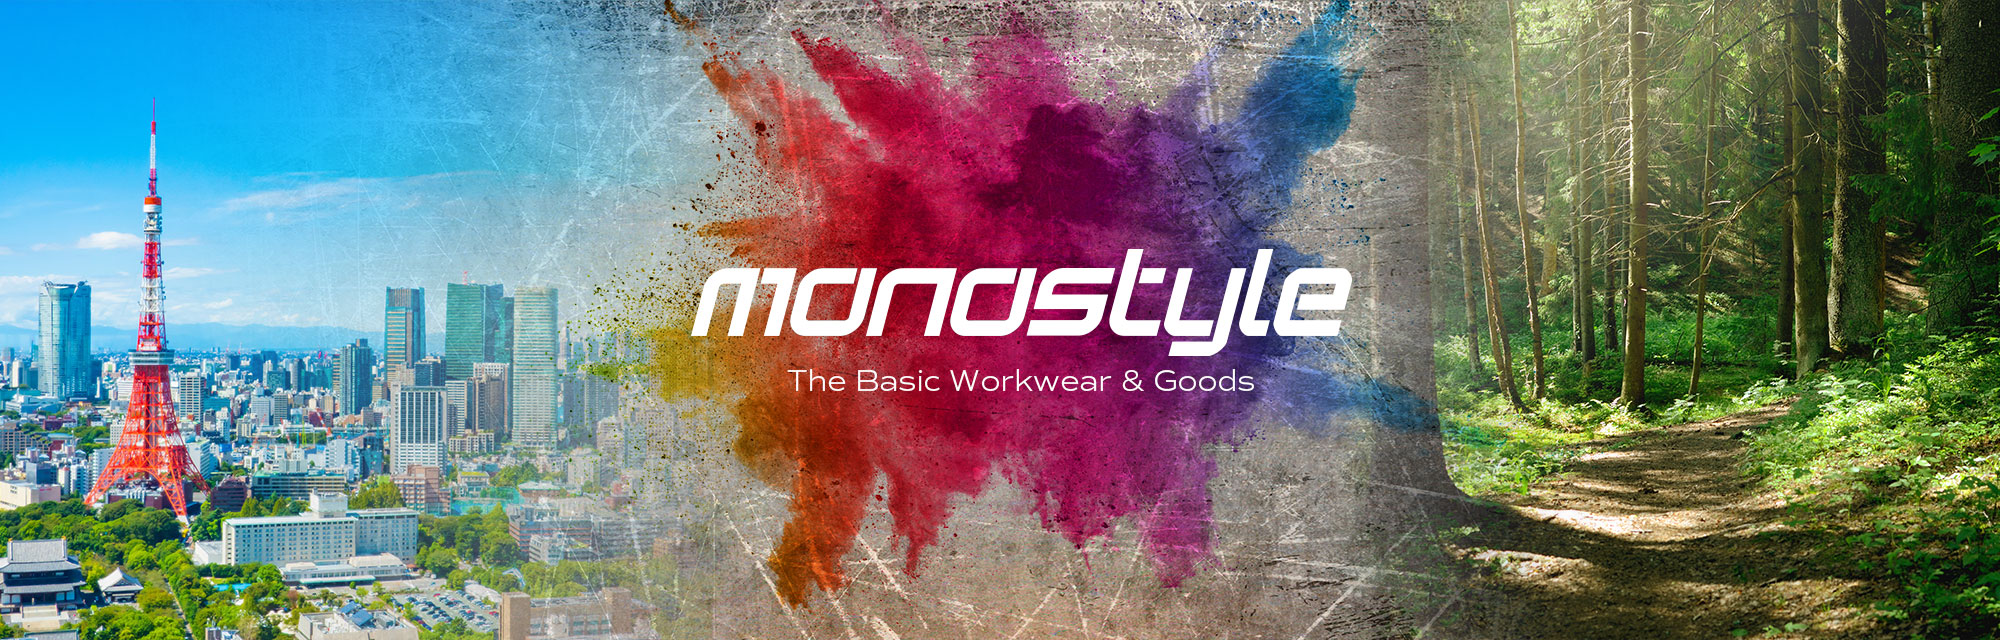 monostyle